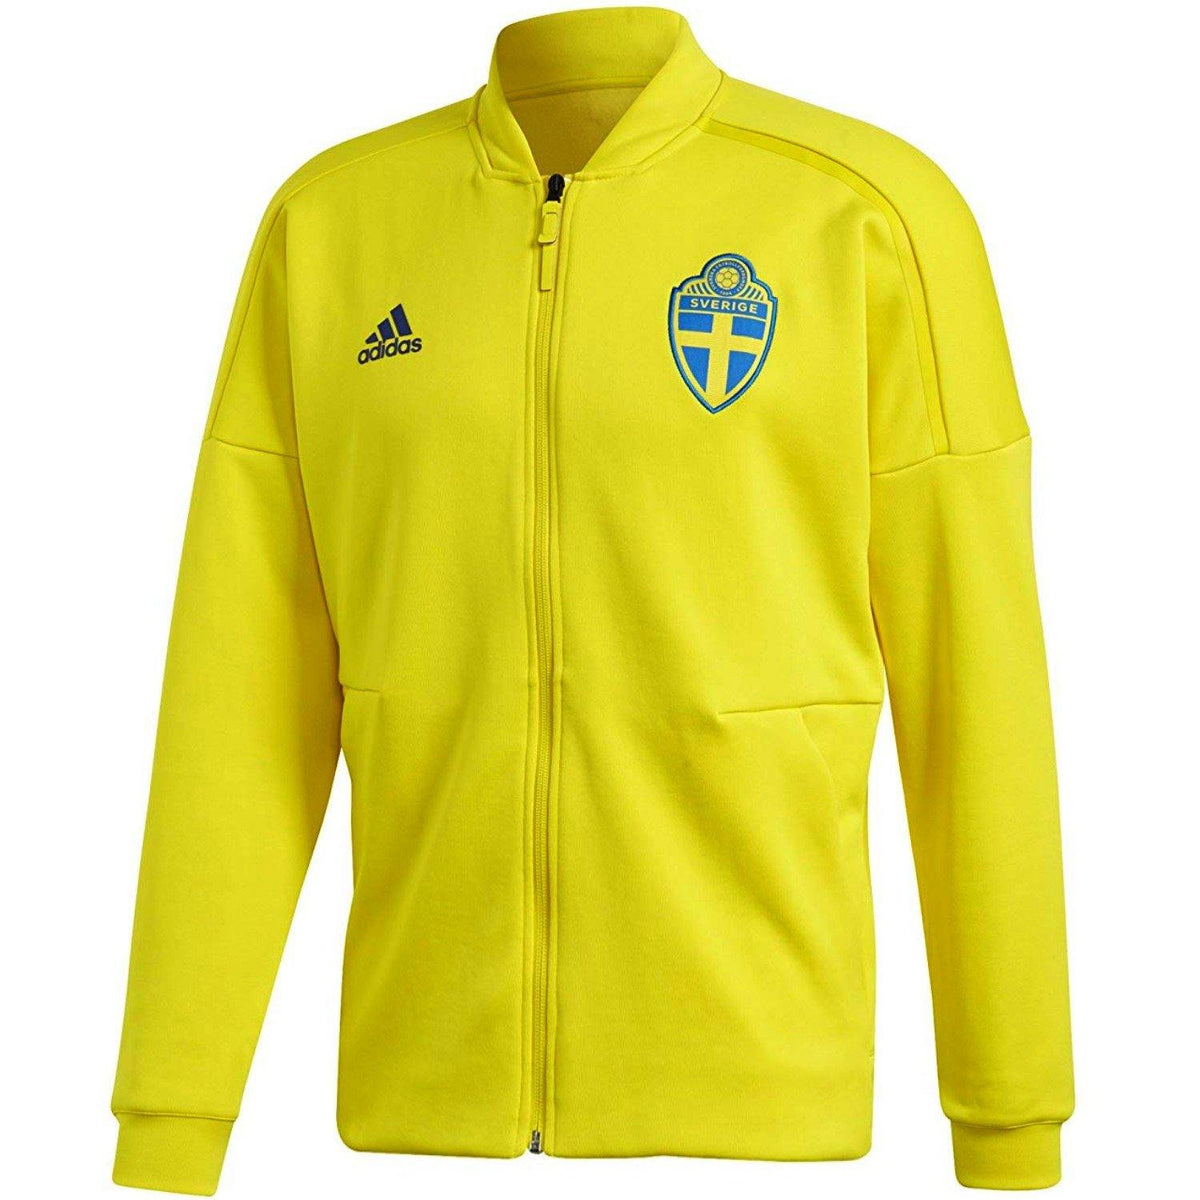 adidas sweden jacket